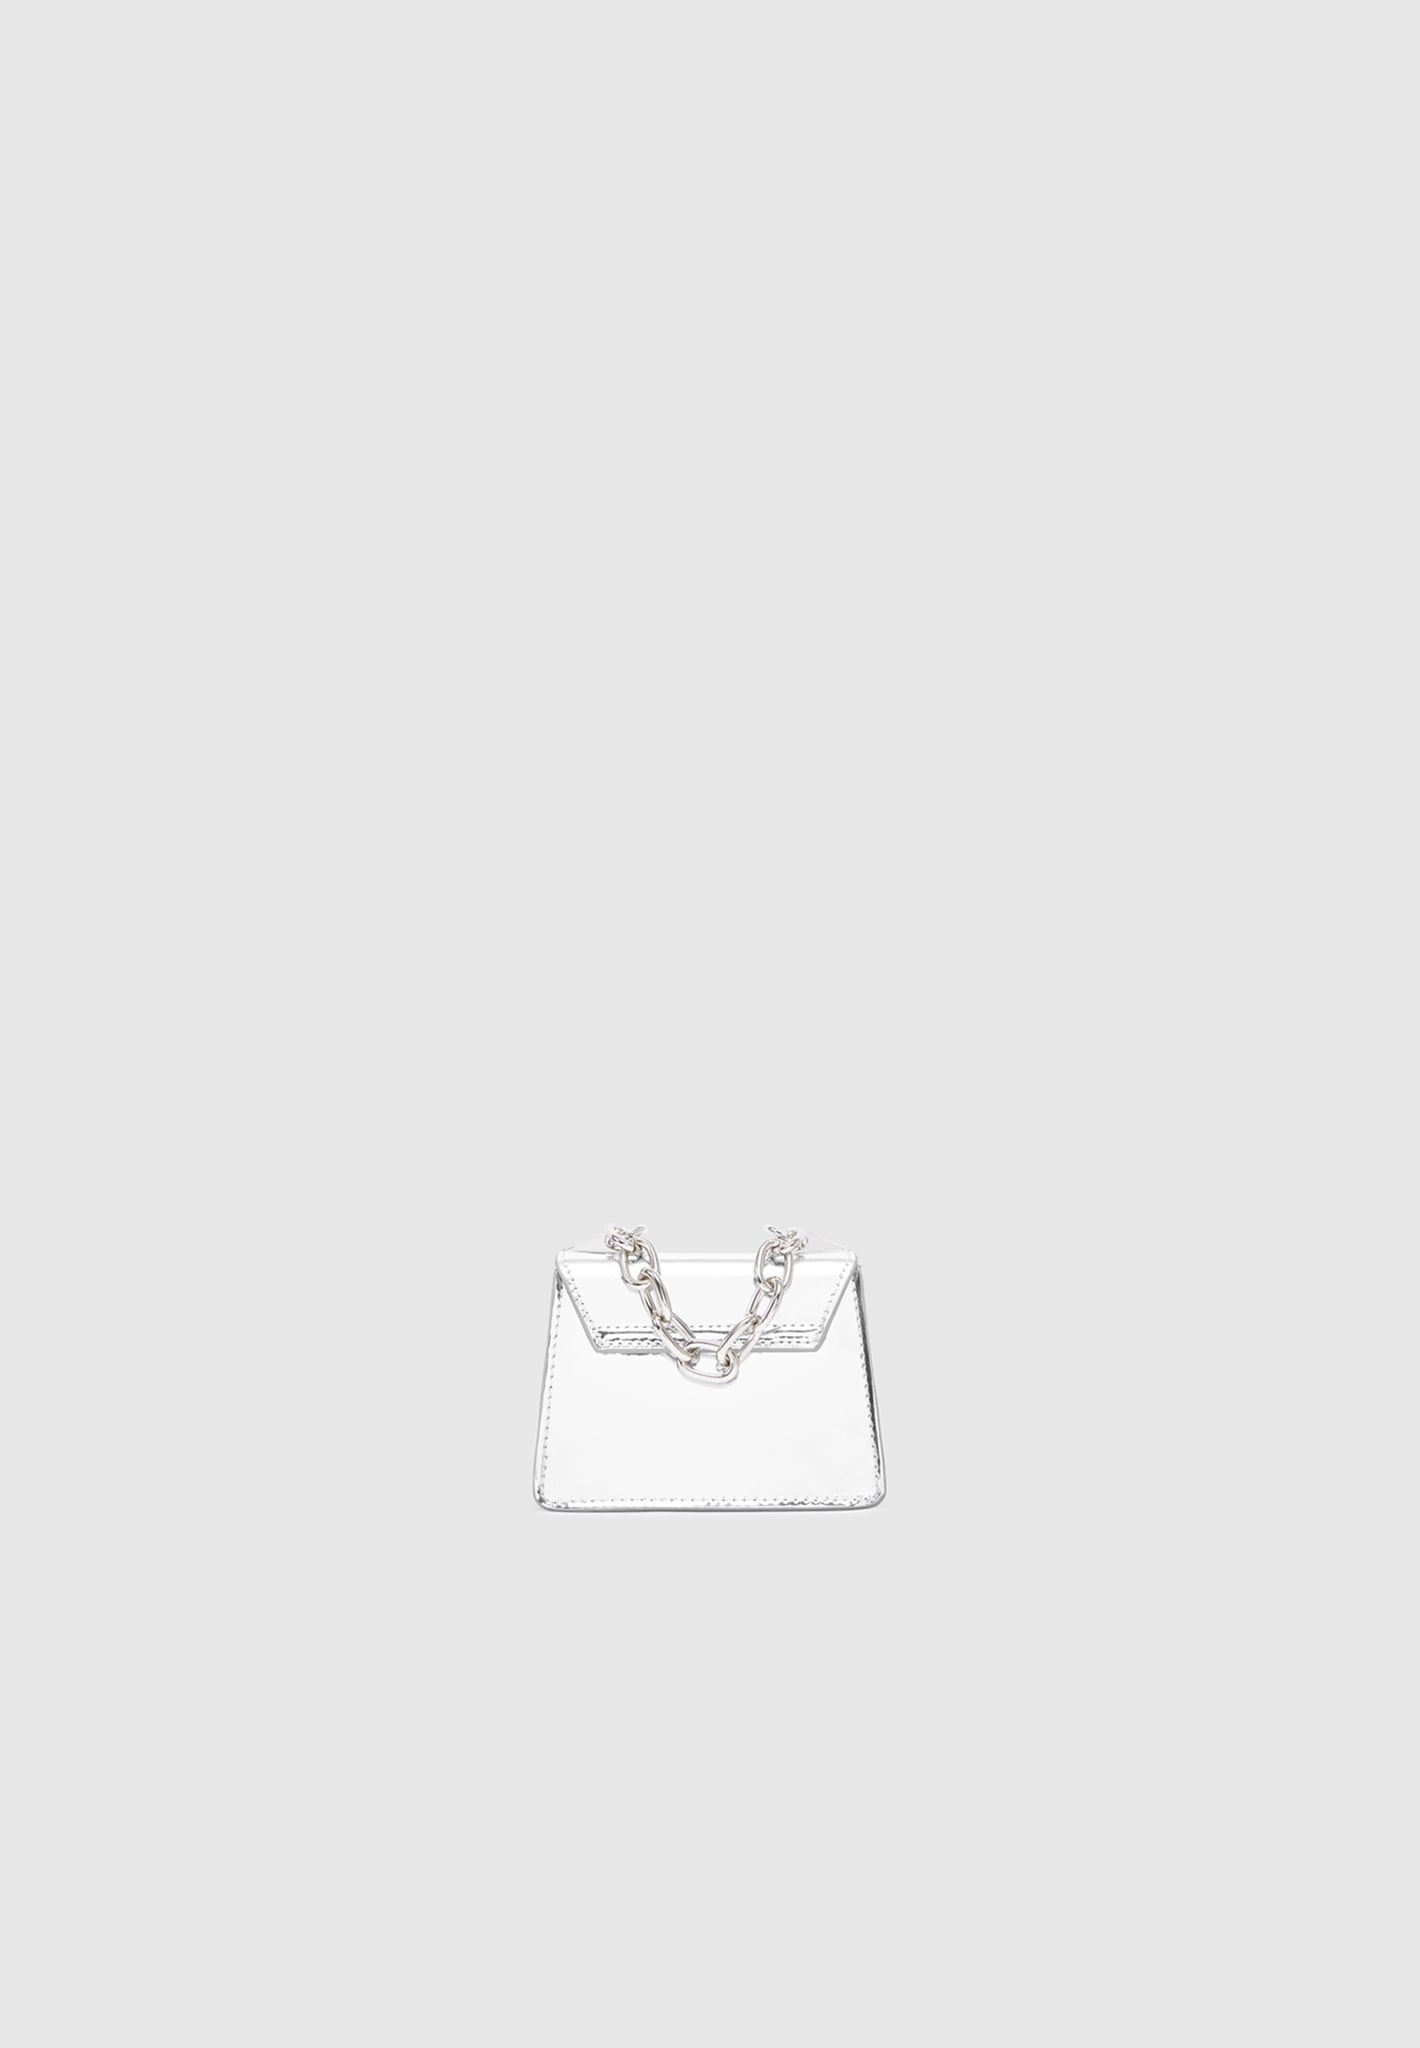 miniature-bag-silver